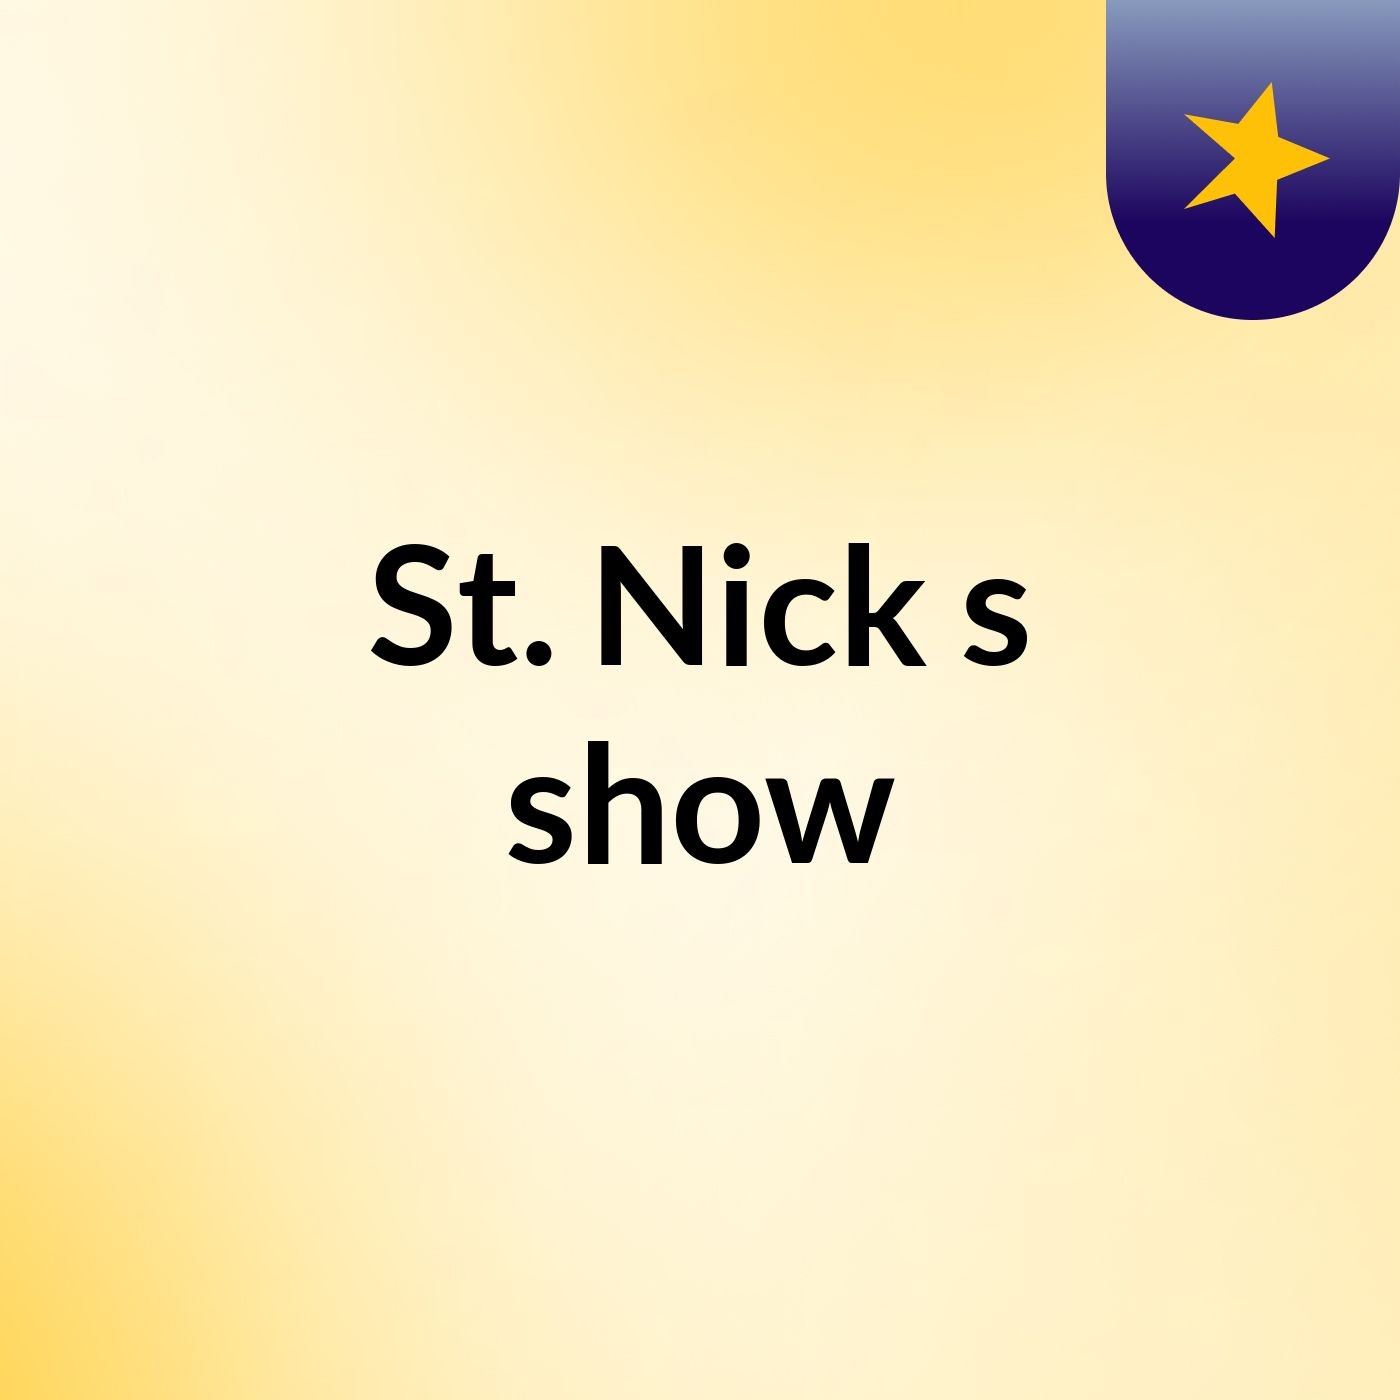 St. Nick's show